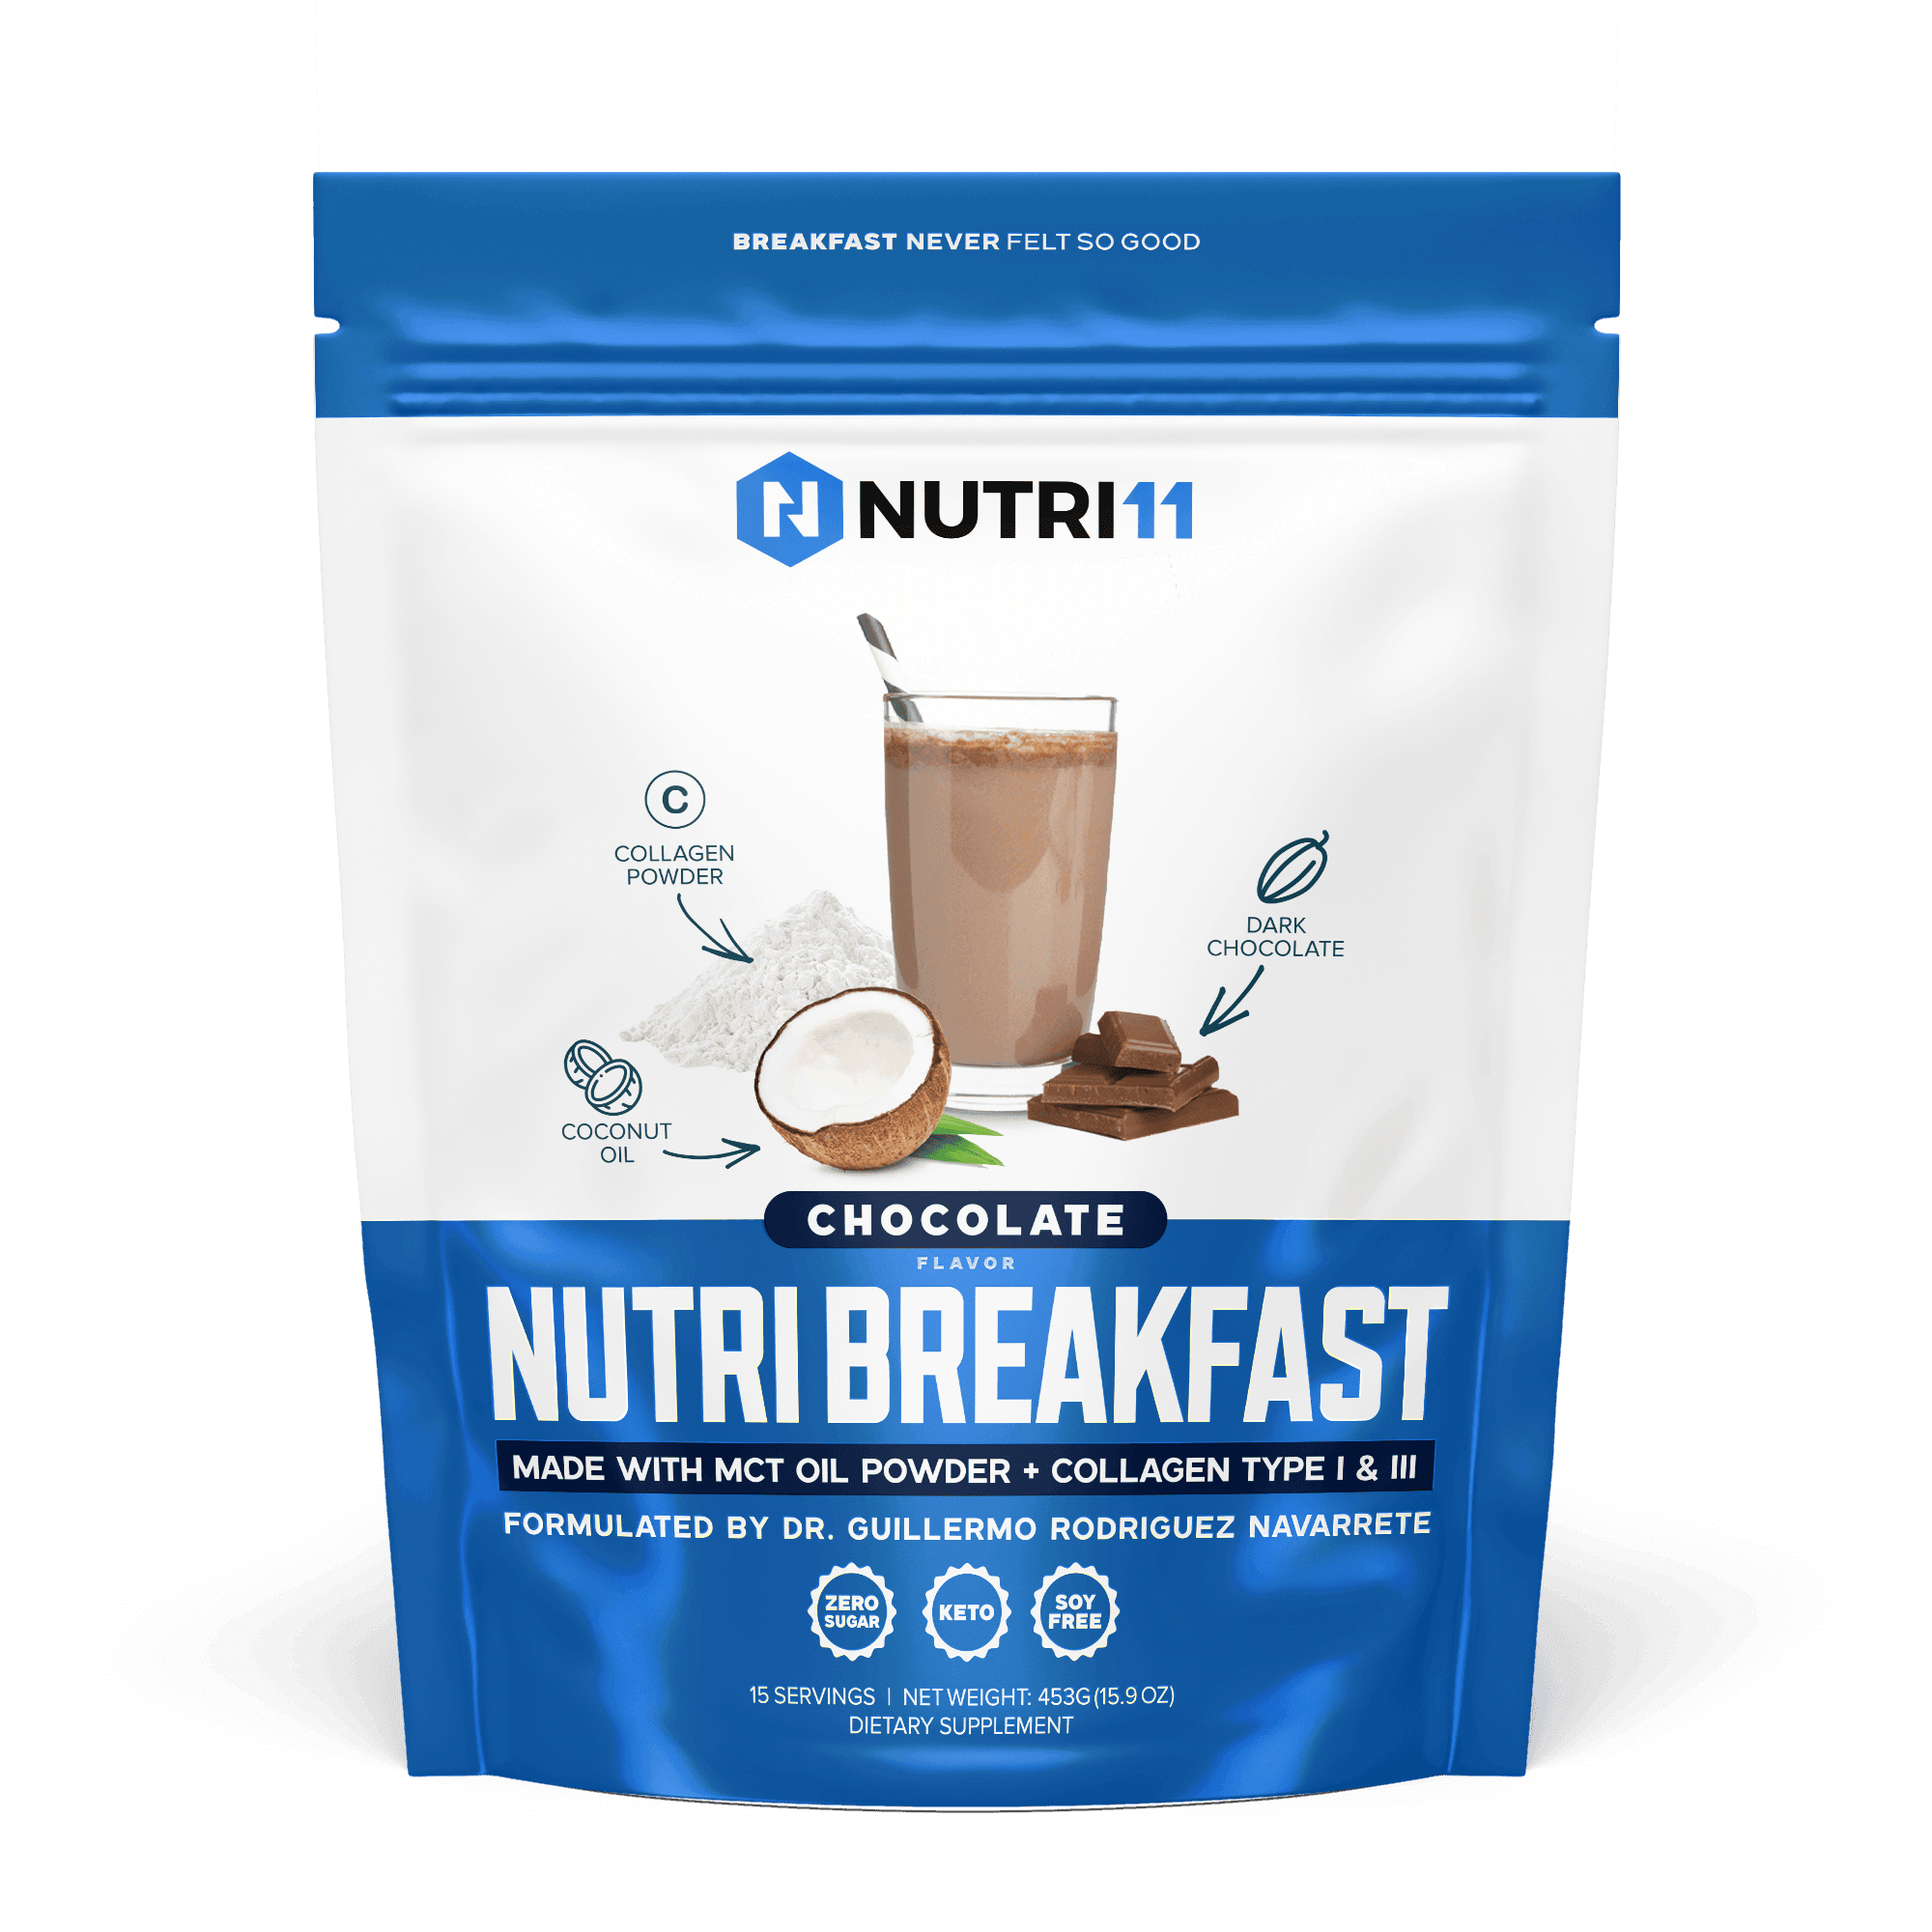 NutriBreakfast - Nutri11